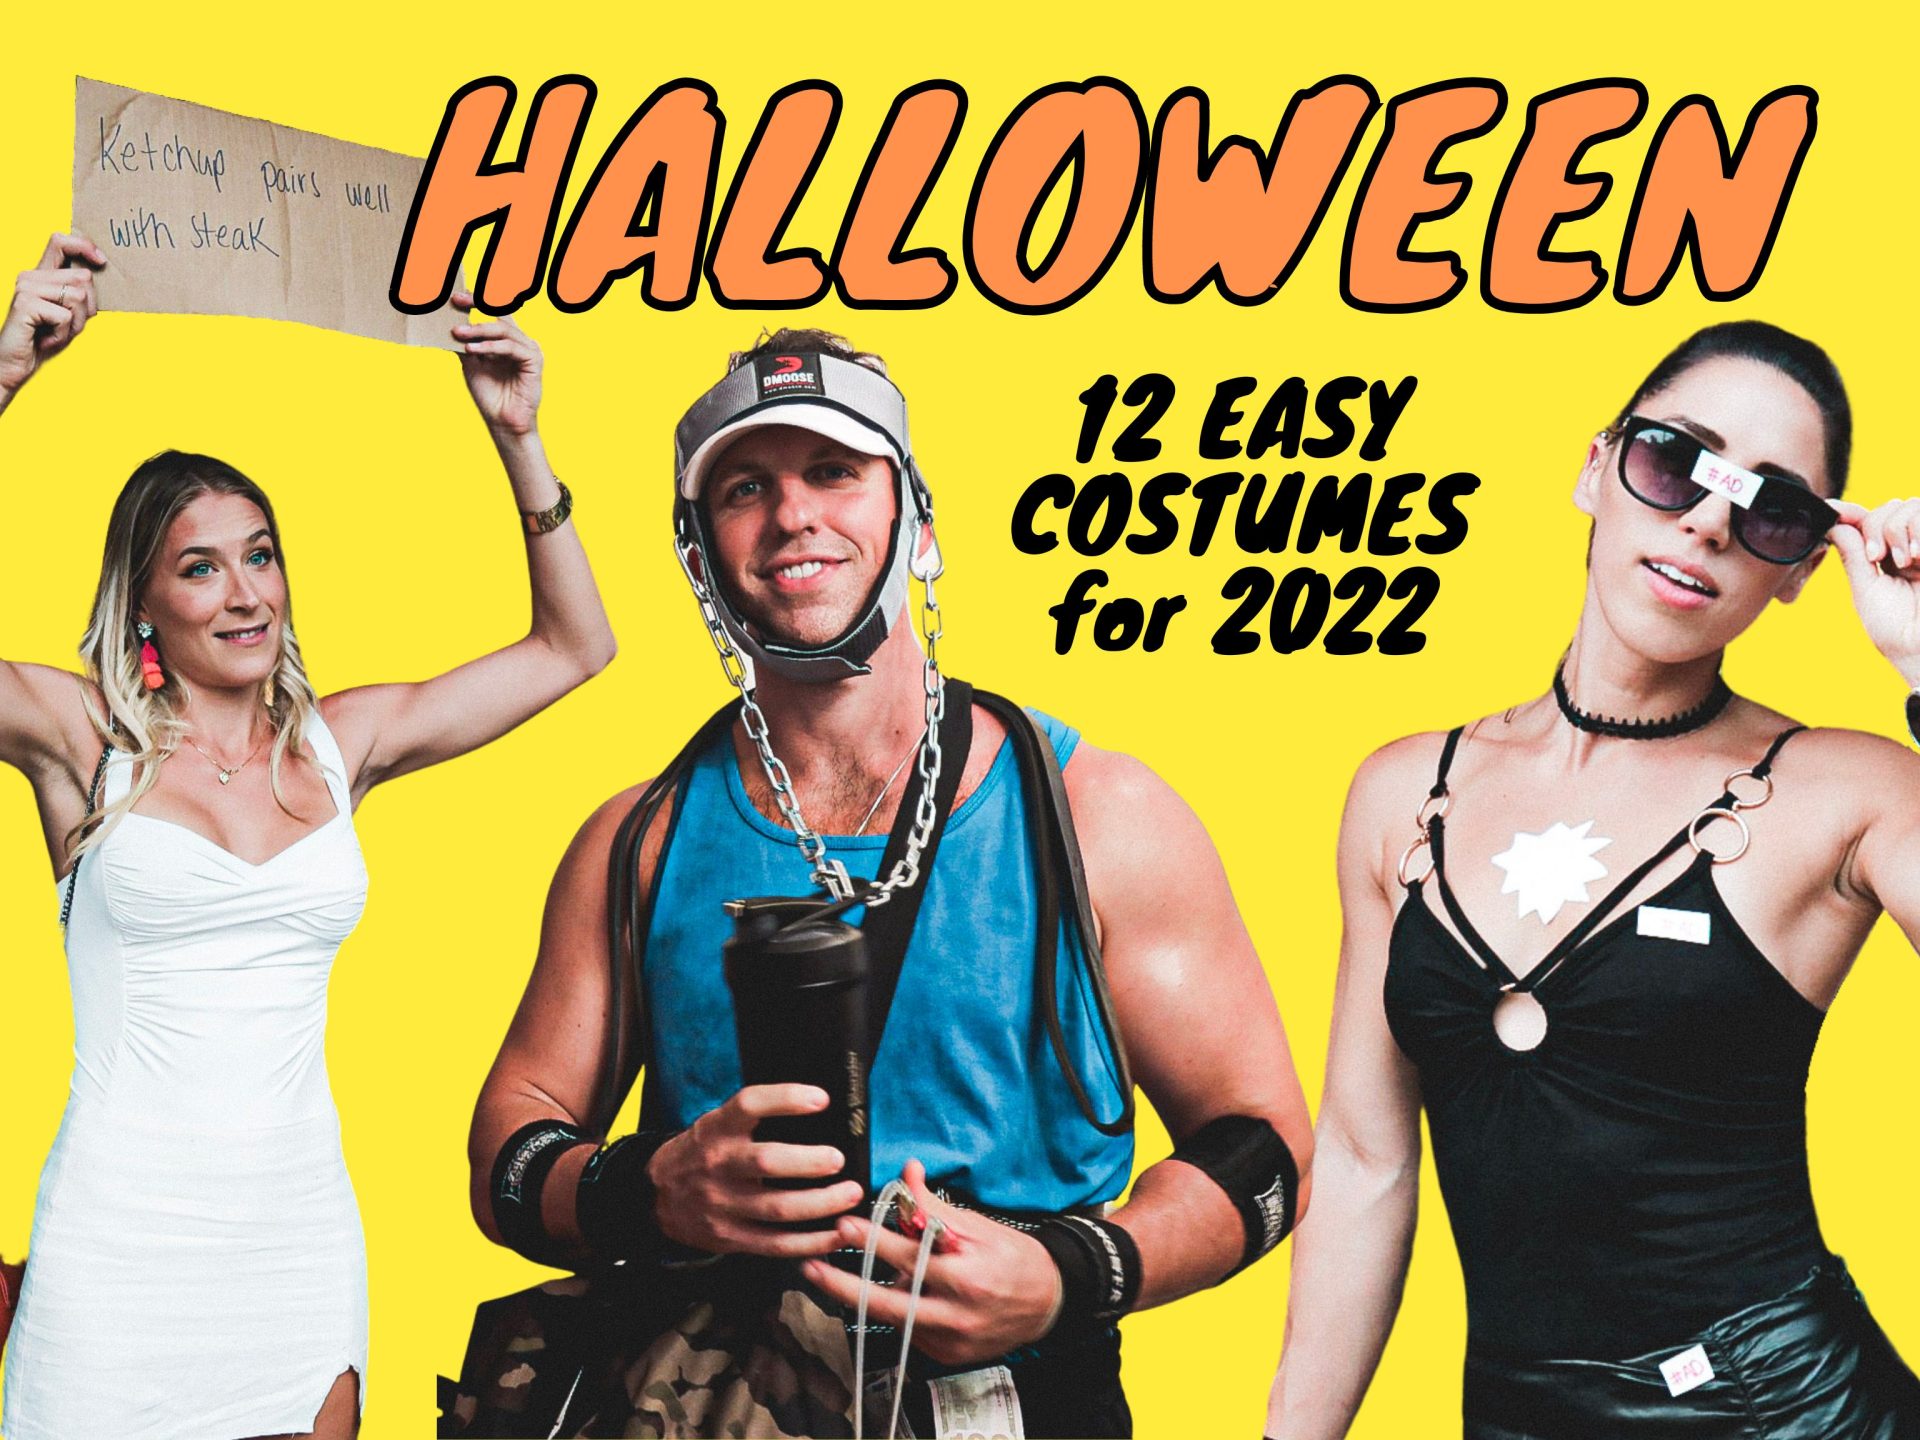 22 Best Halloween Costume Ideas for Men 2021 | Easy DIY Costumes for Guys